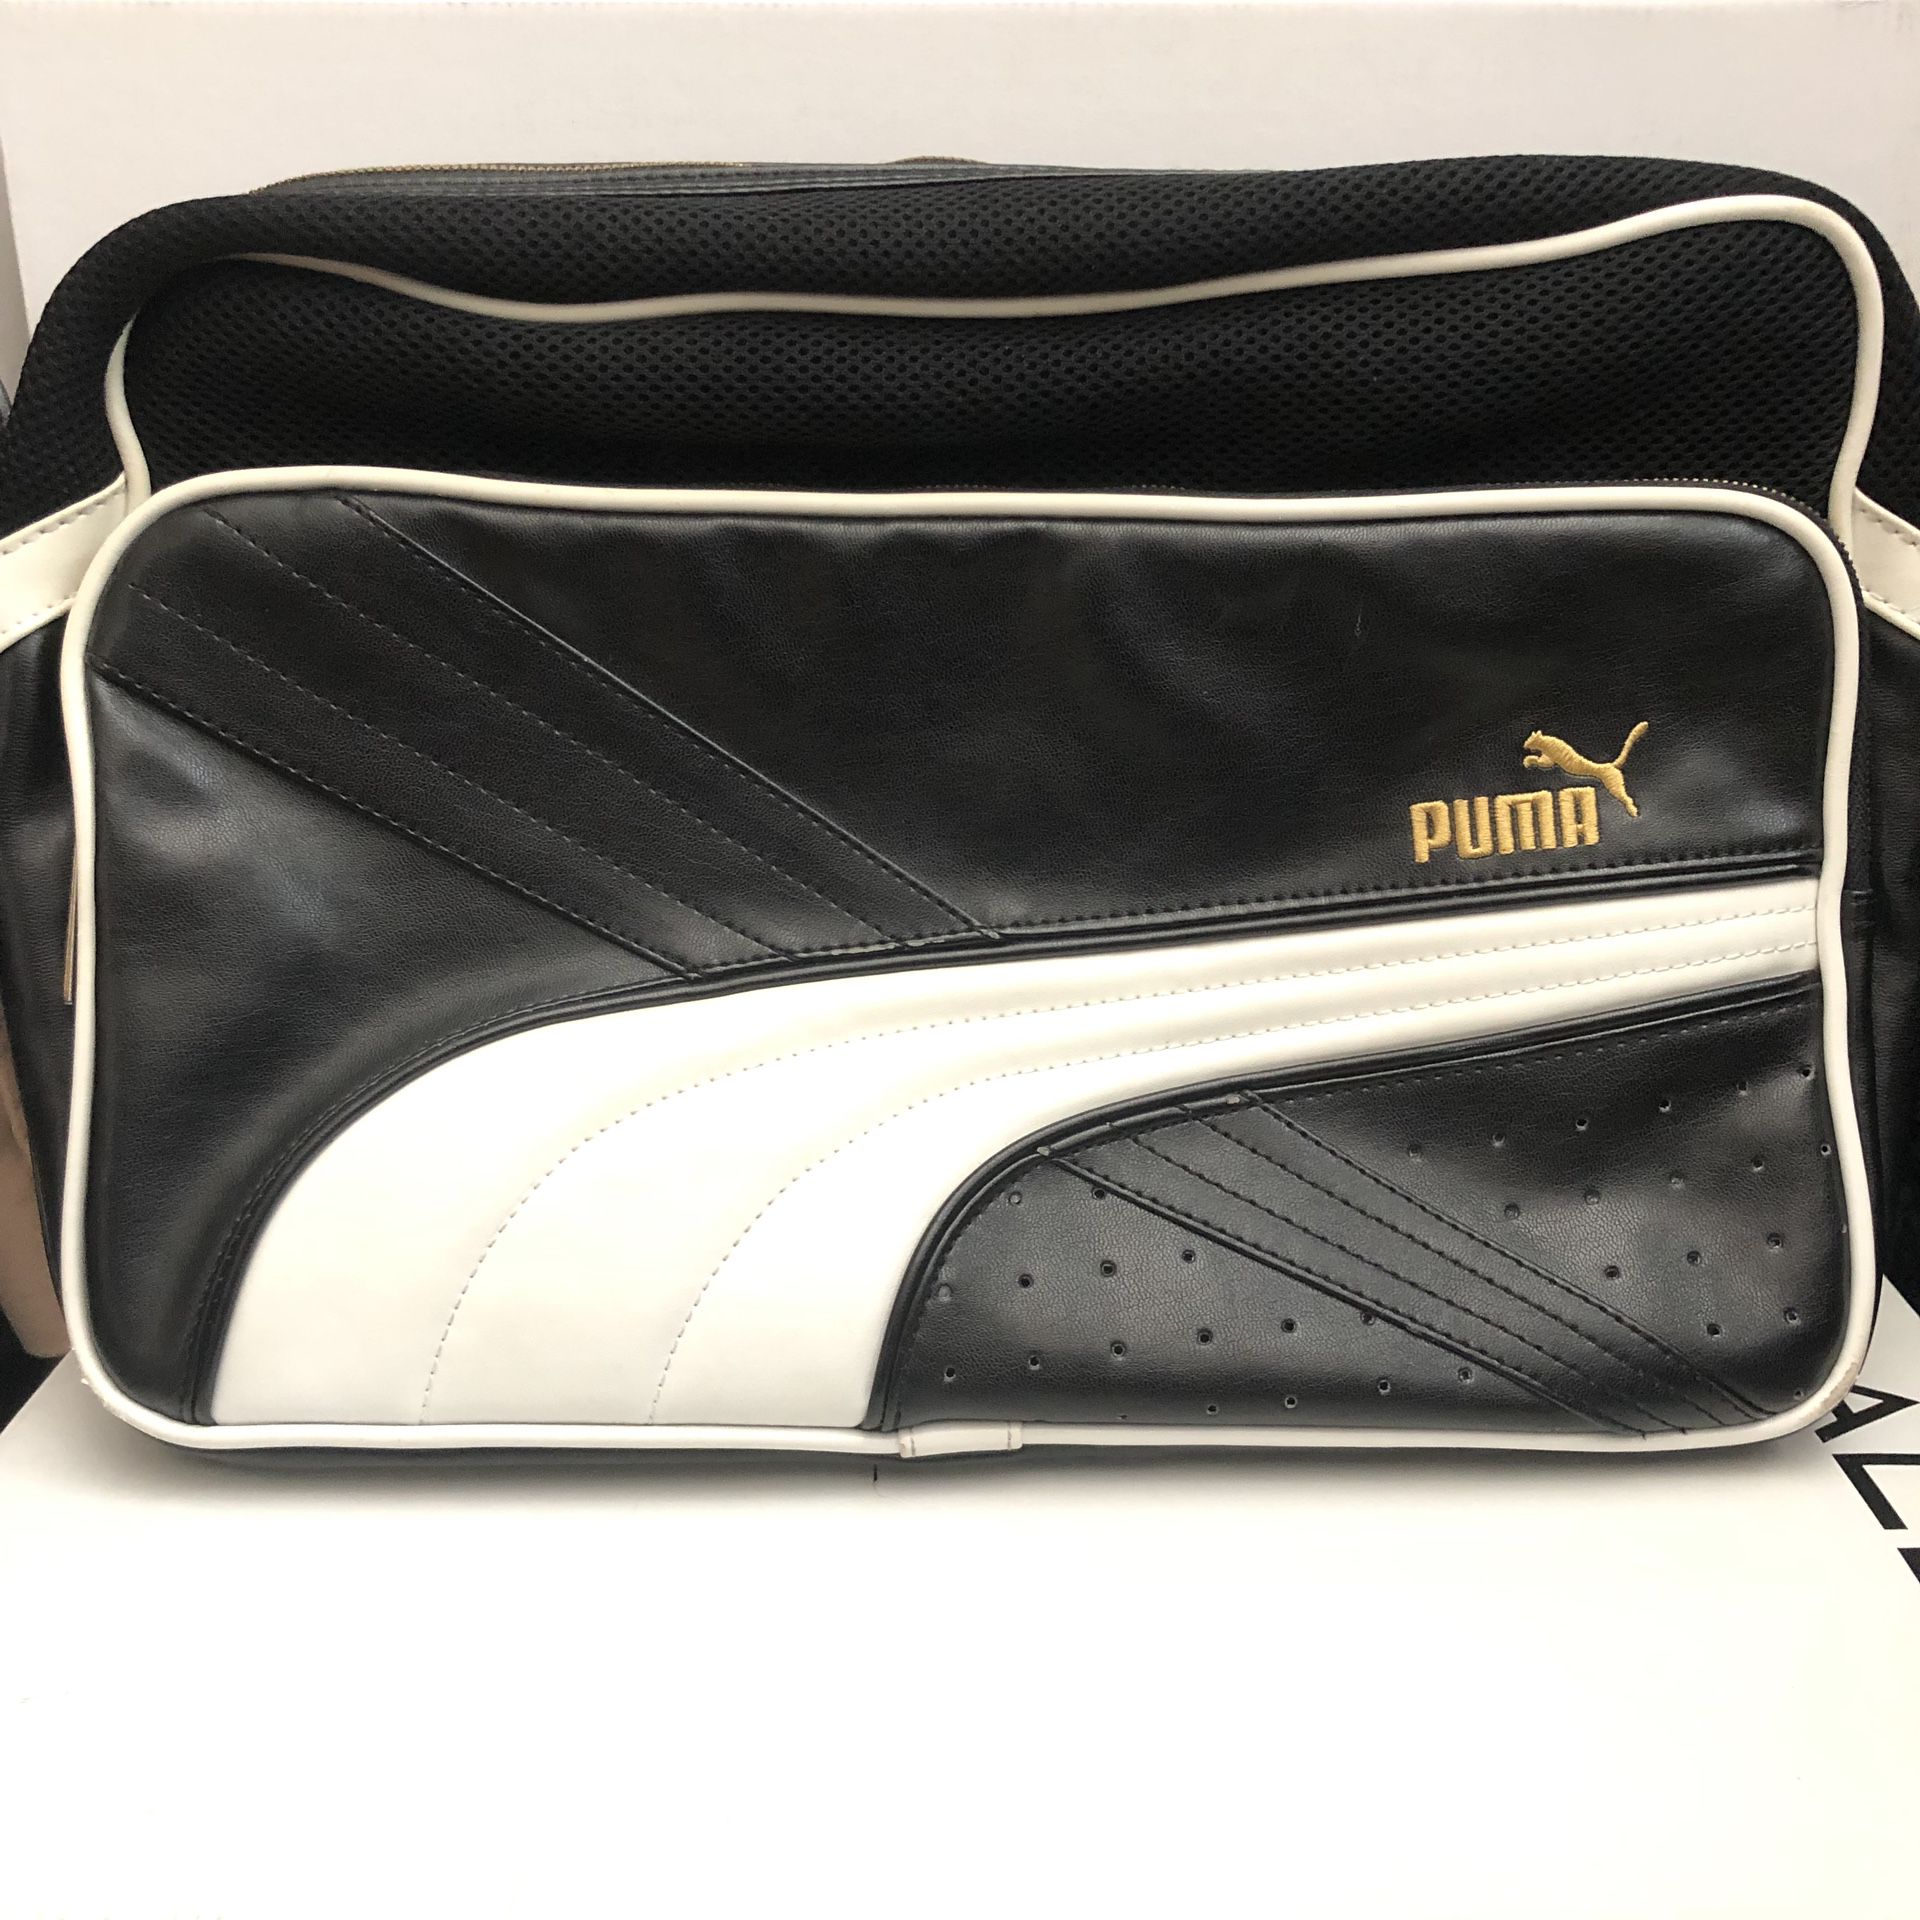 Puma Leather Messenger Bag.